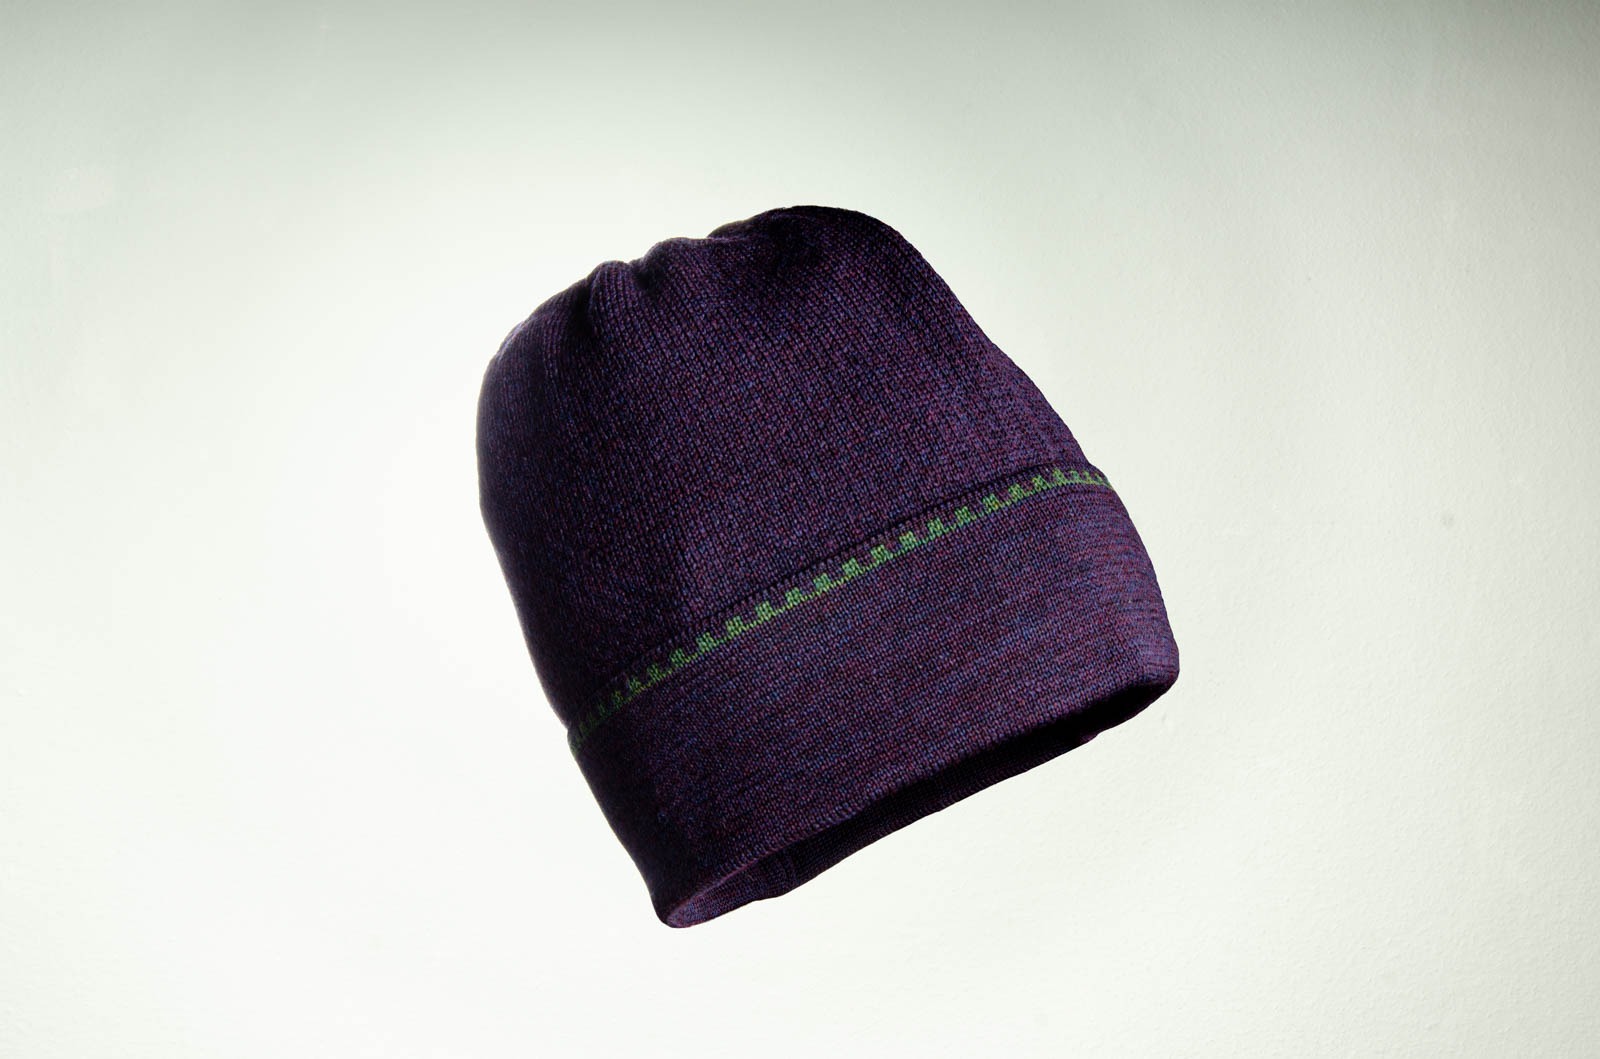 Merino scarf, hat and wrist warmers Ireland in purple and dark green 9